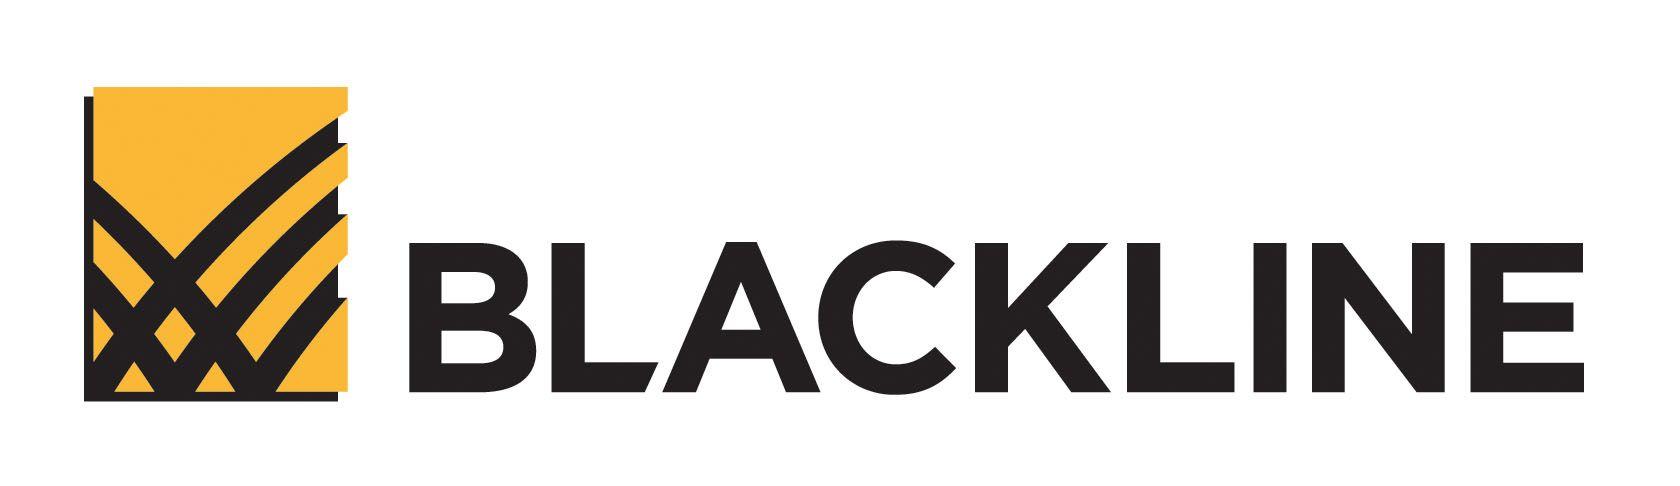 Black Line Logo - BlackLine logo